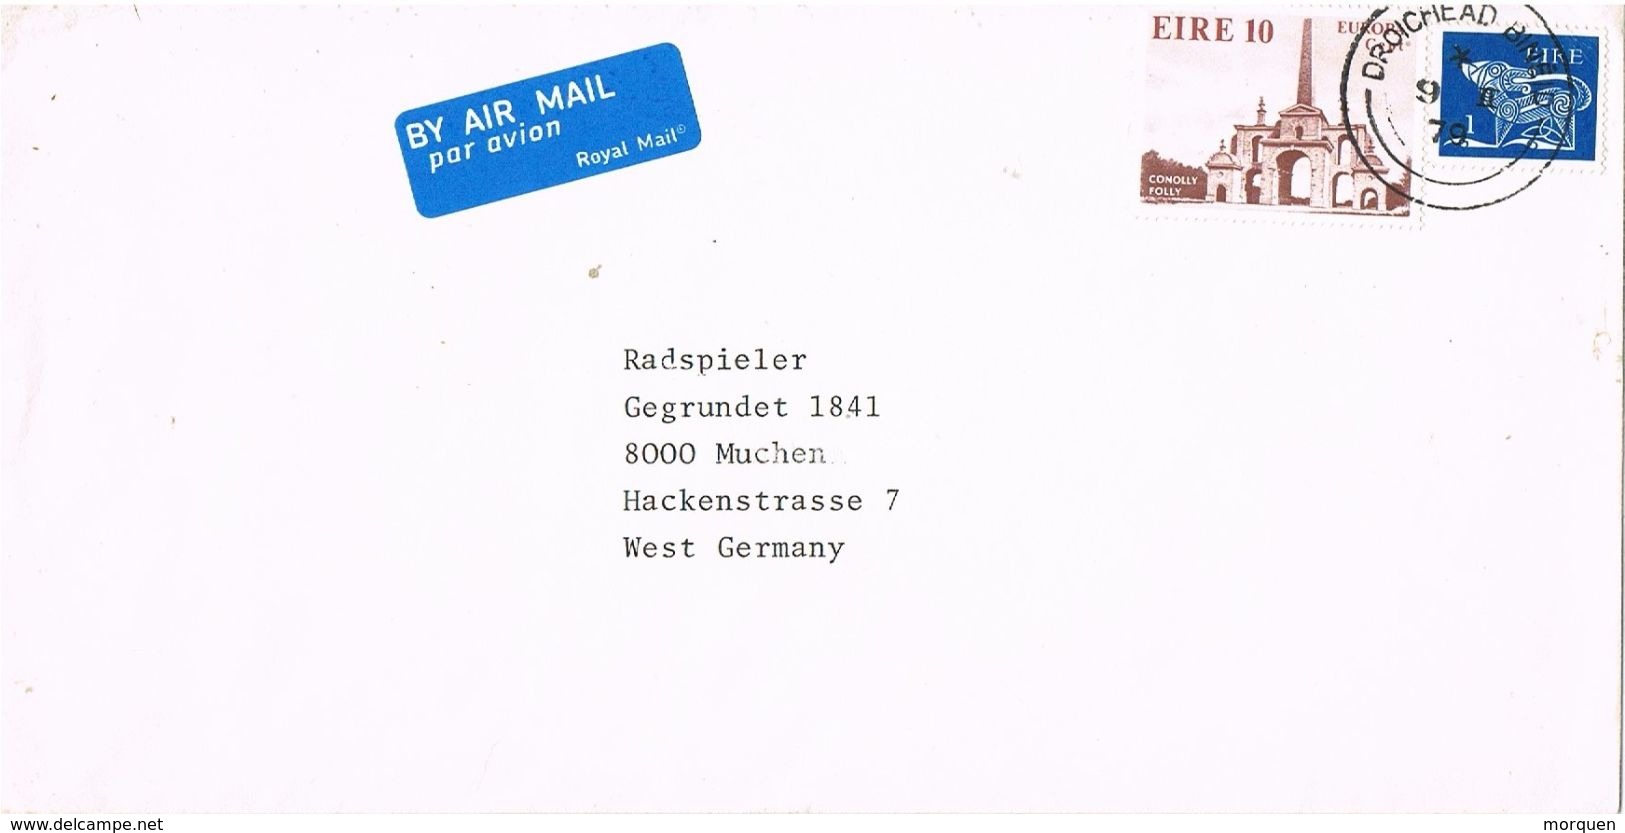 26987. Carta Aerea DROICHEAD BINEID (Irlanda) Eire 1979 - Covers & Documents